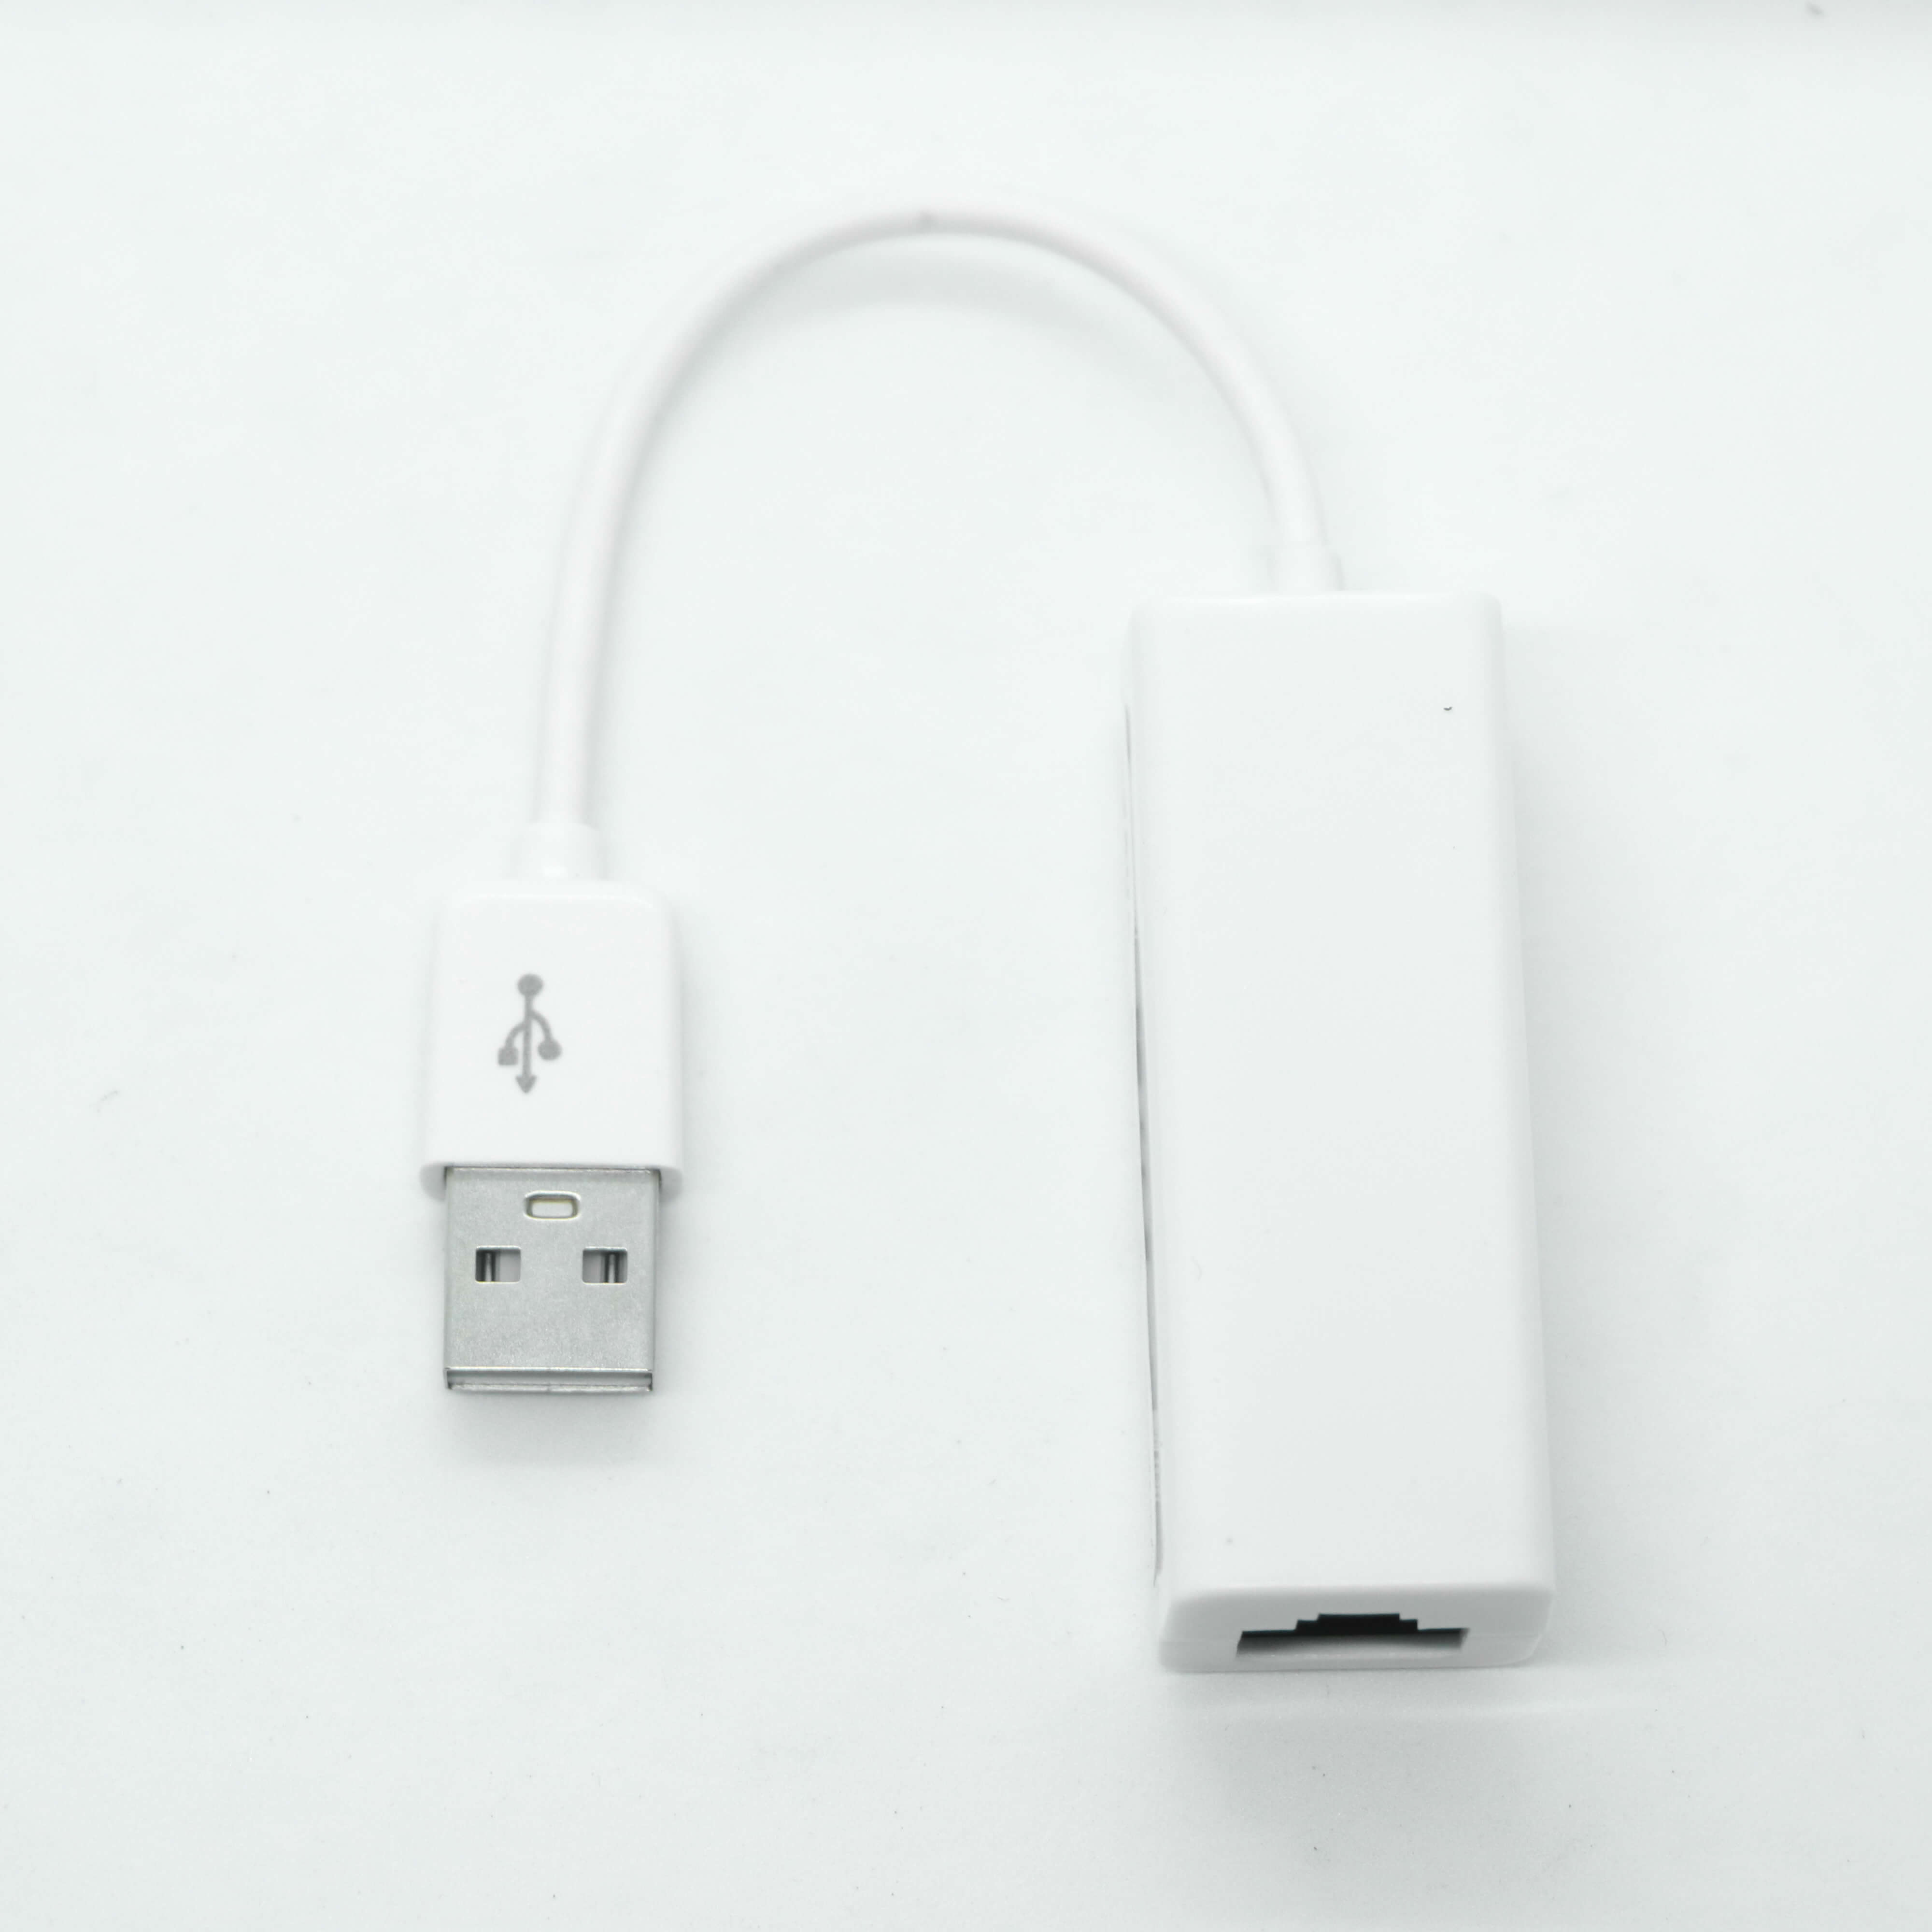 Standard LAN Card USB 2.0 Ethernet Adapter